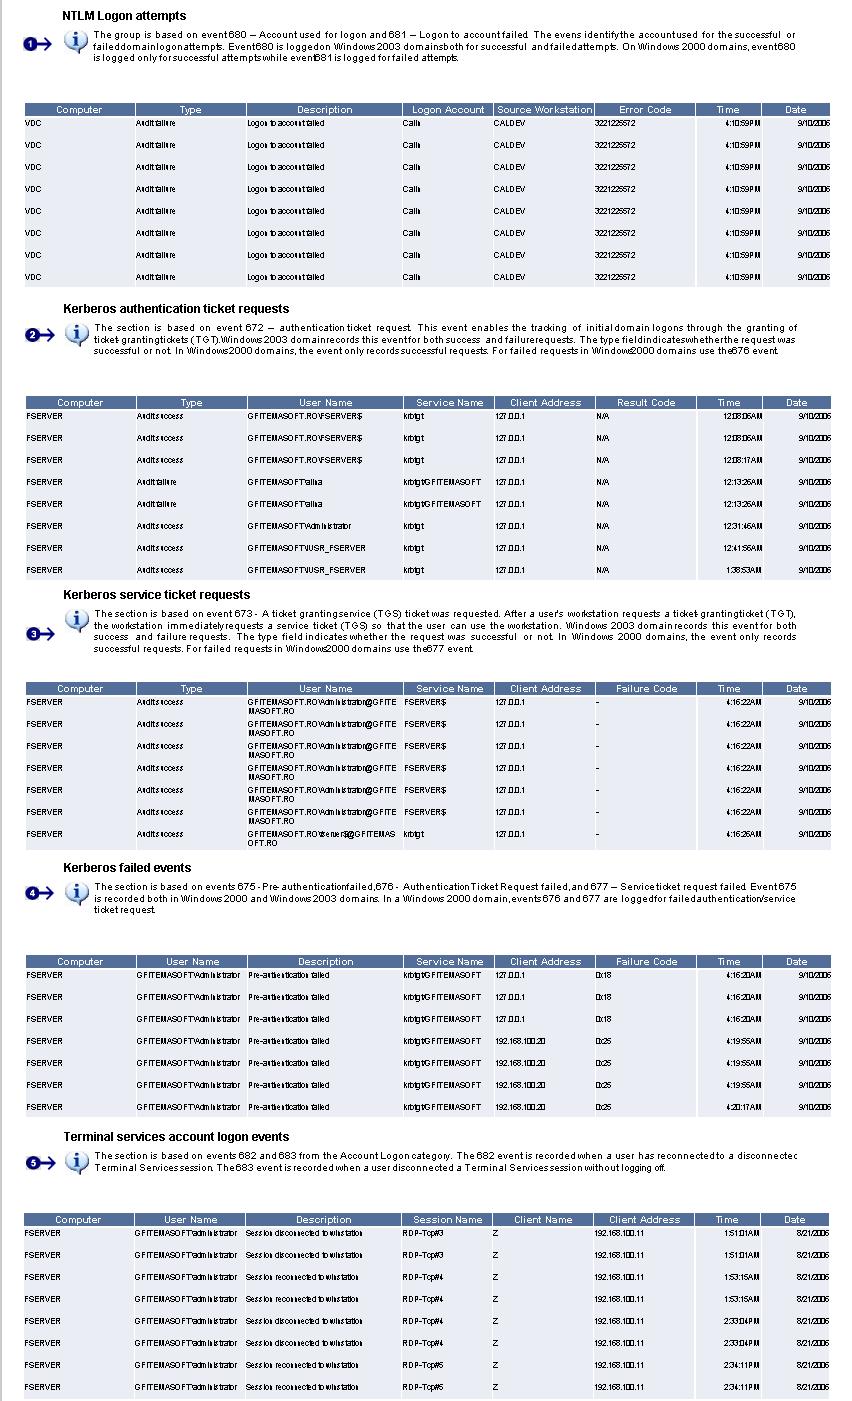 Account Logons Screenshot 50 - Sample report showing account logons GFI